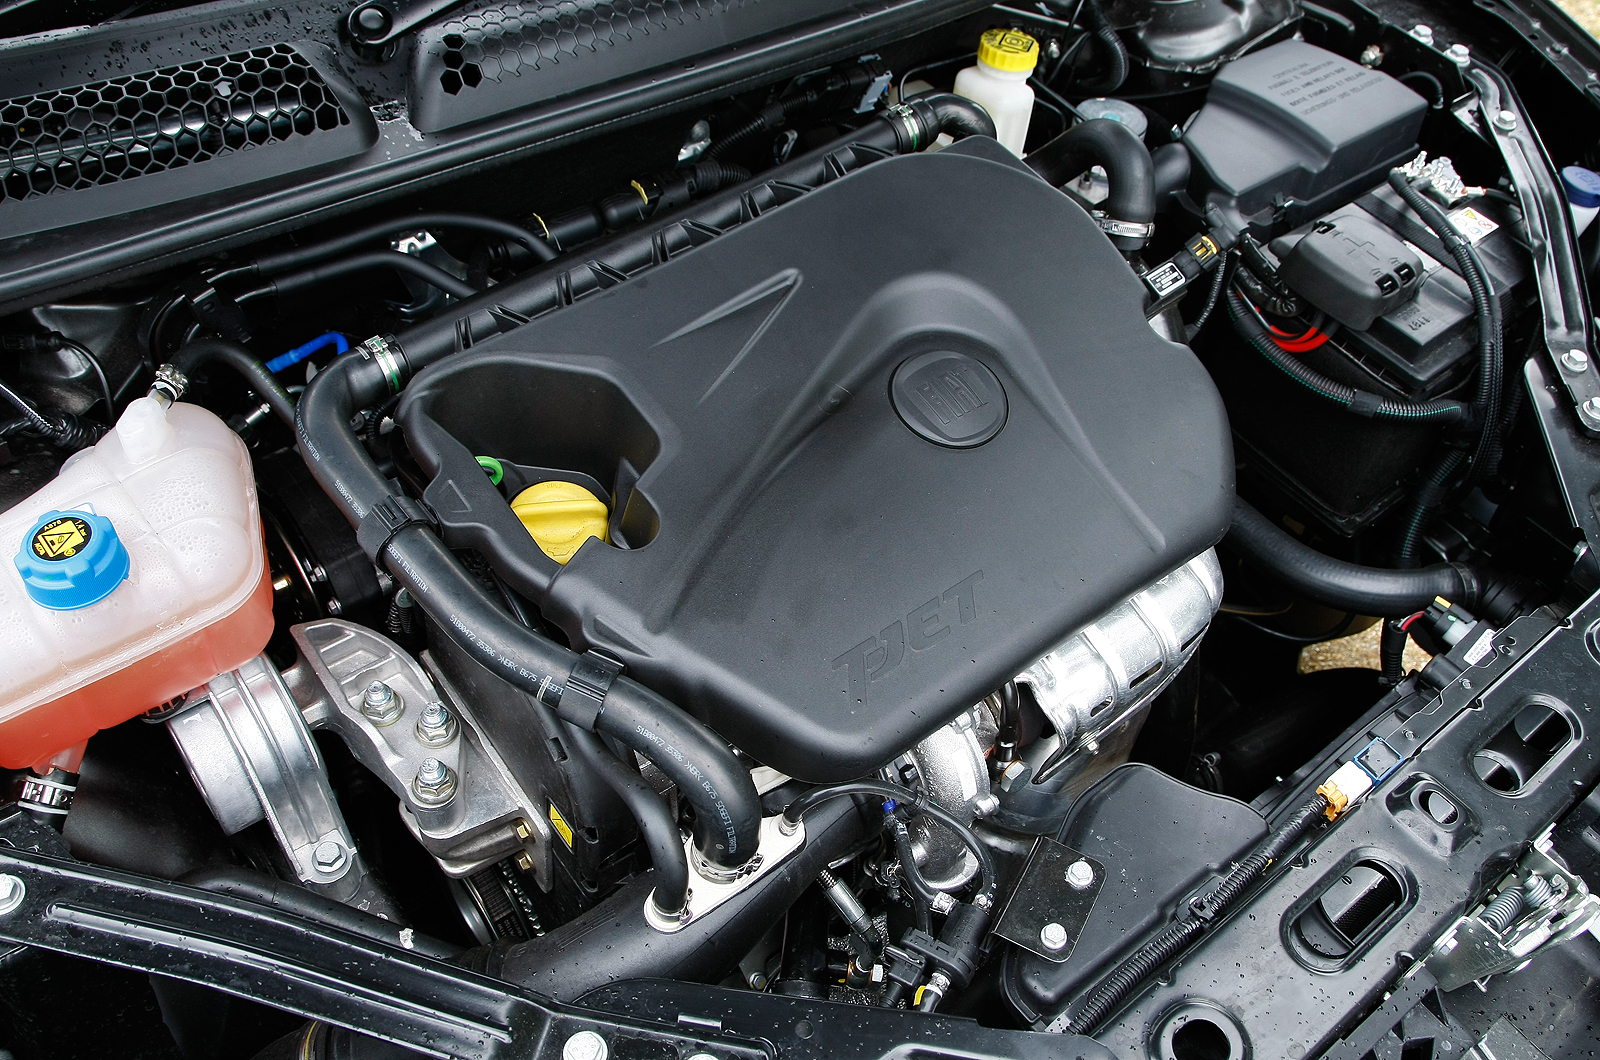 1.6-litre Fiat Bravo Multijet diesel engine